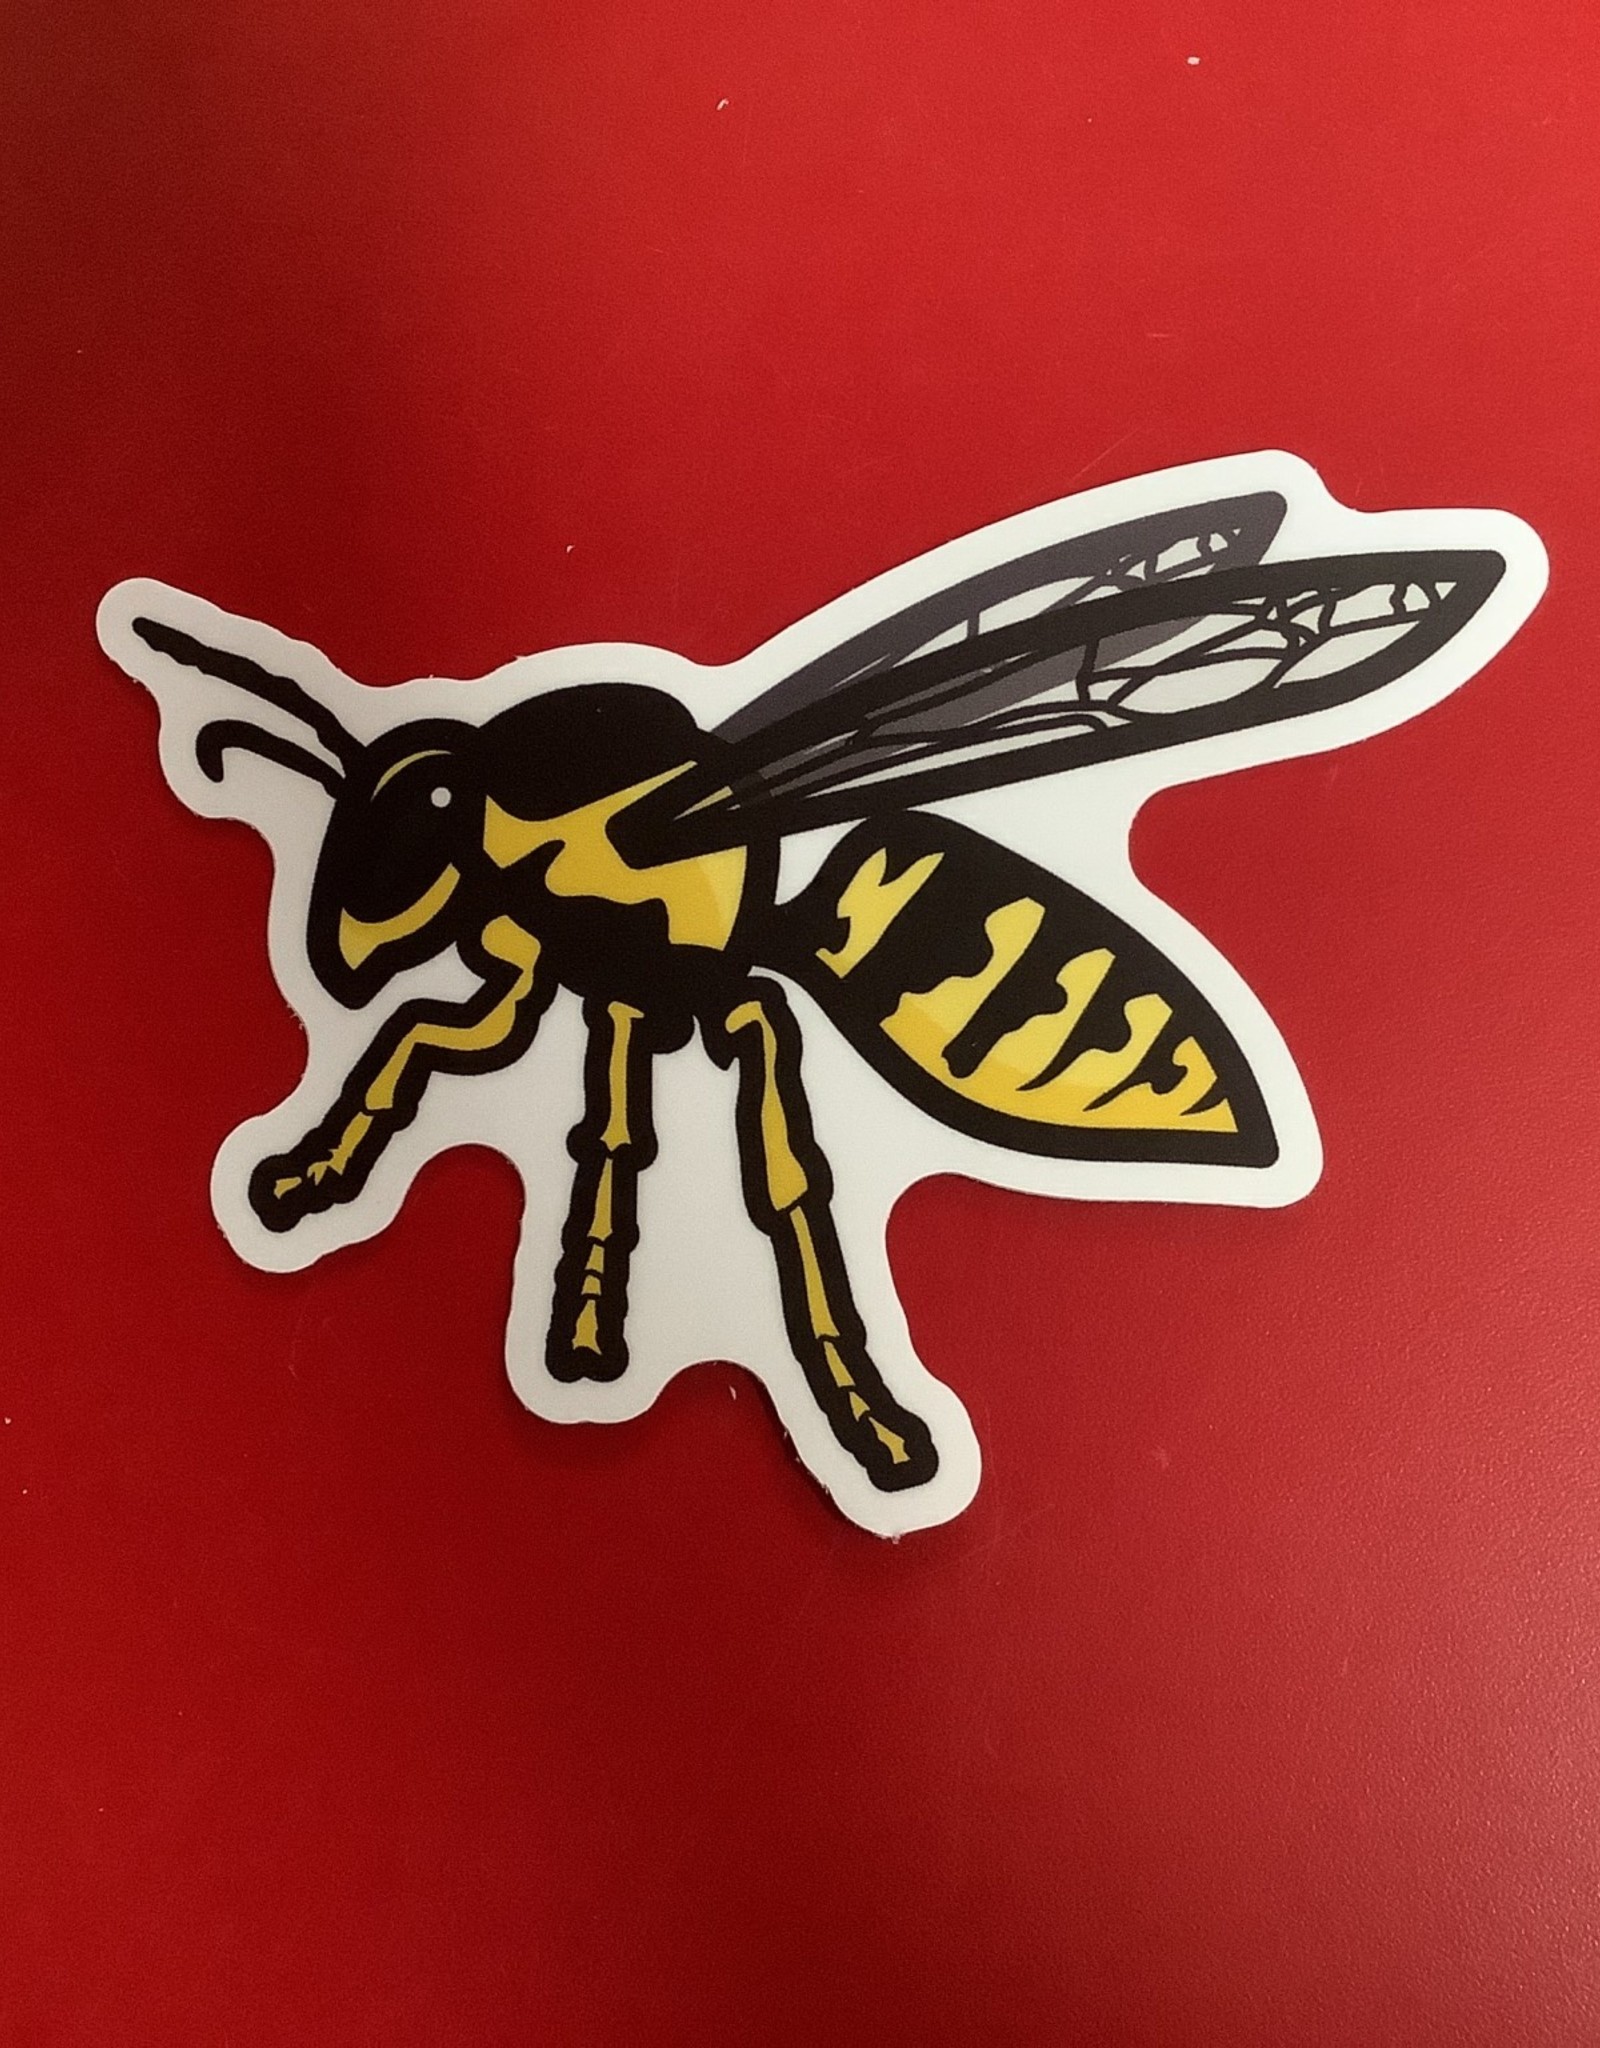 Stickers NW Wasp Sticker